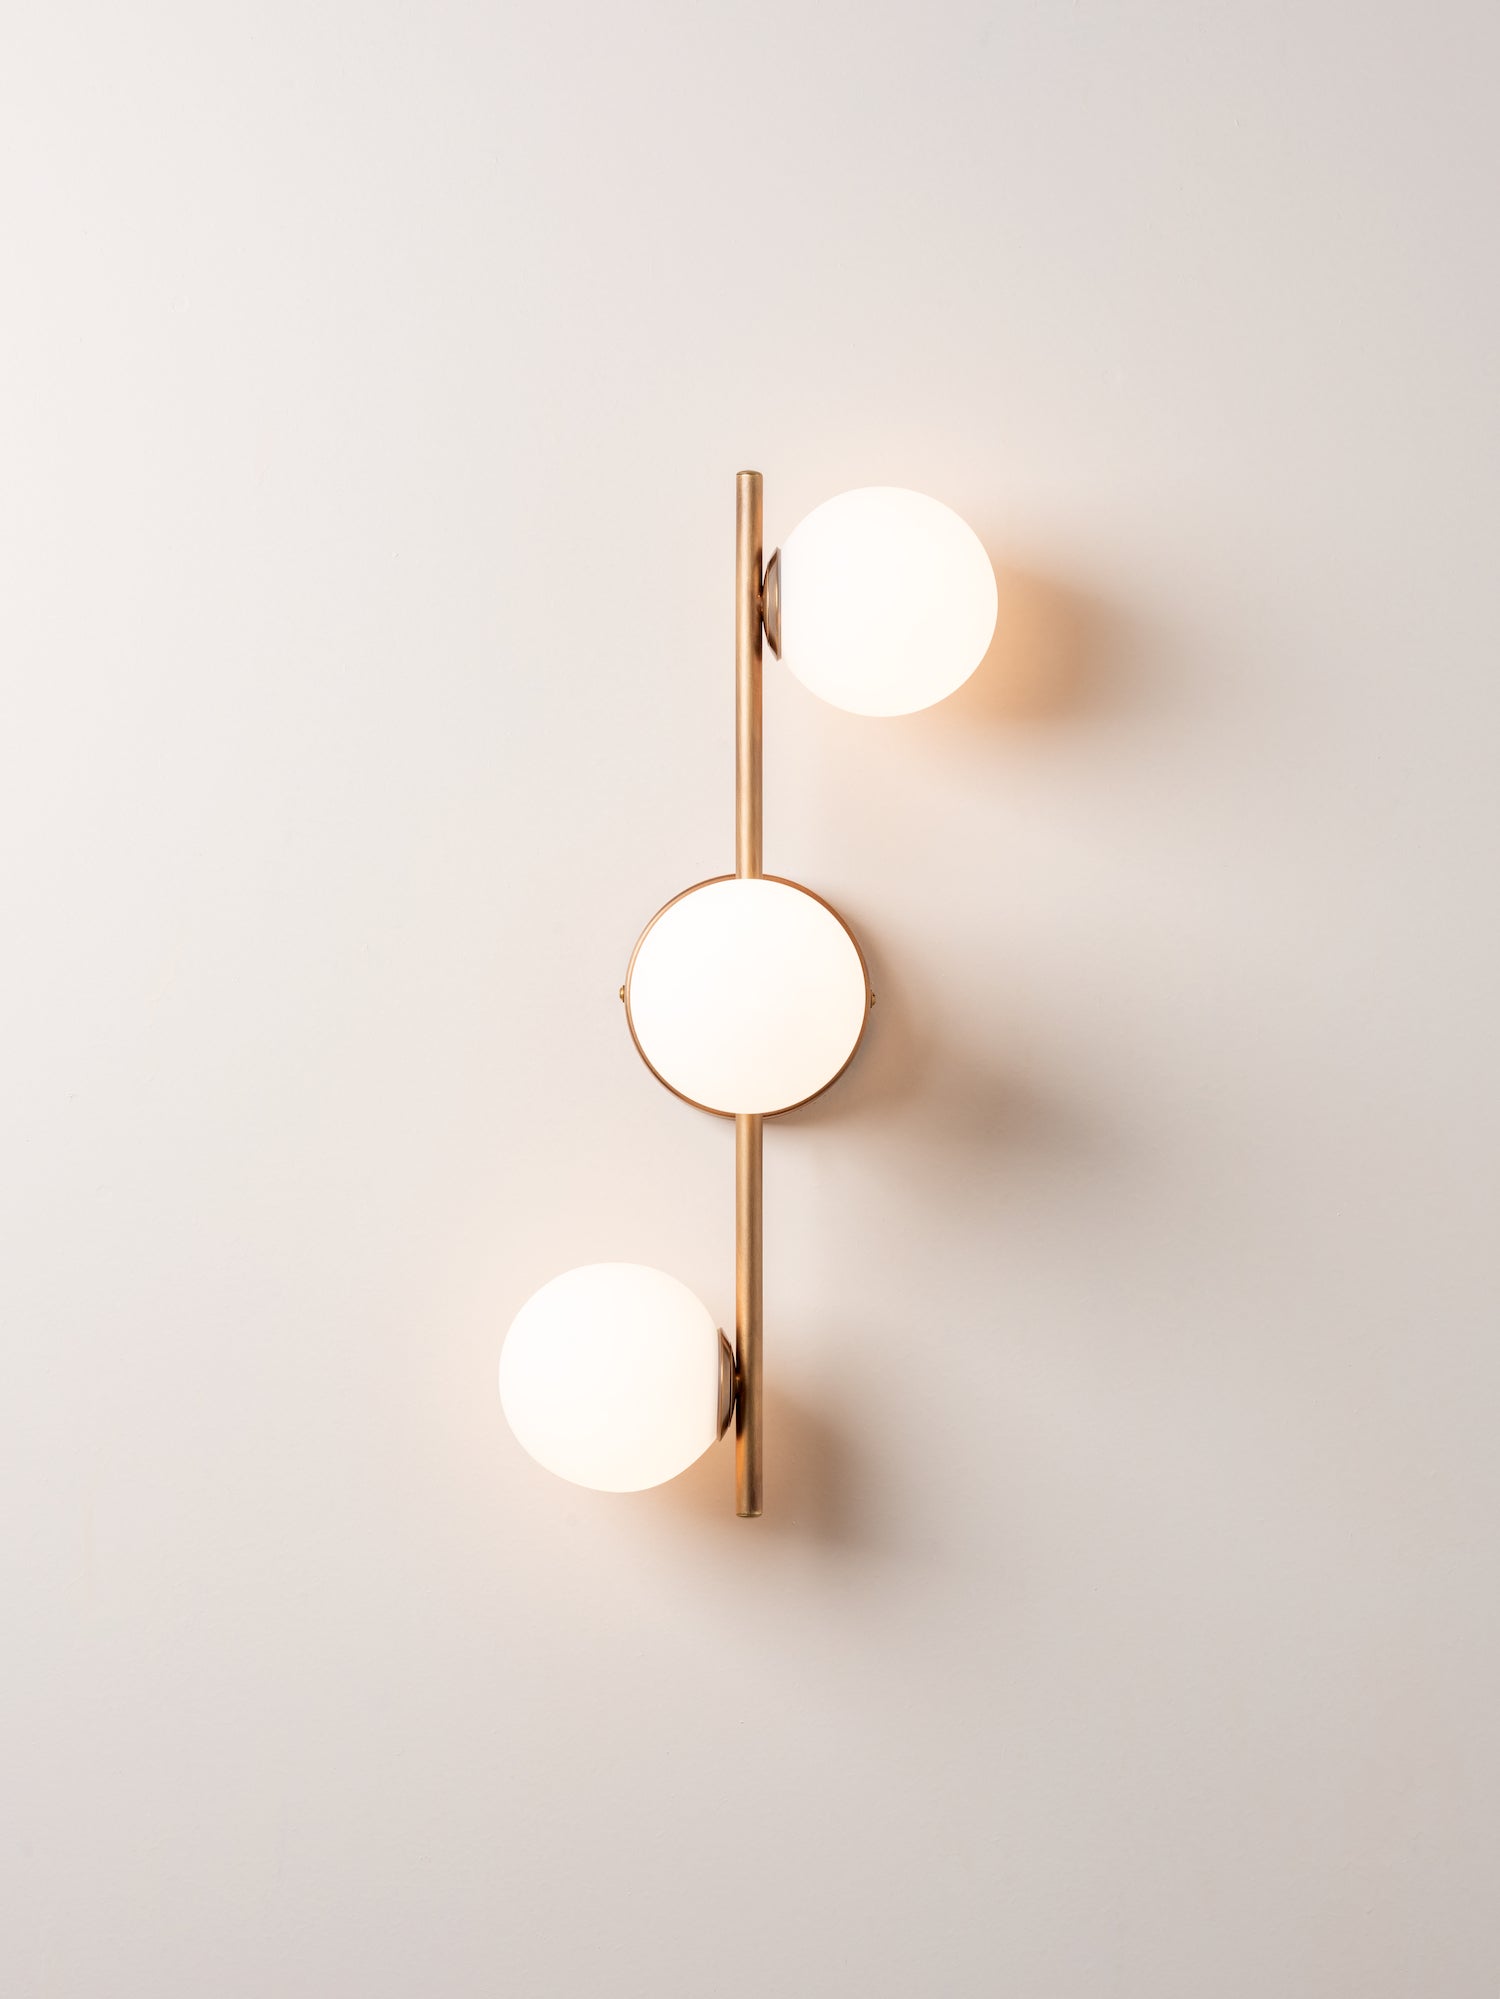 Coro - 3 light aged brass and opal ceiling / wall | Ceiling Light | Lights & Lamps | UK | Modern Affordable Designer Lighting